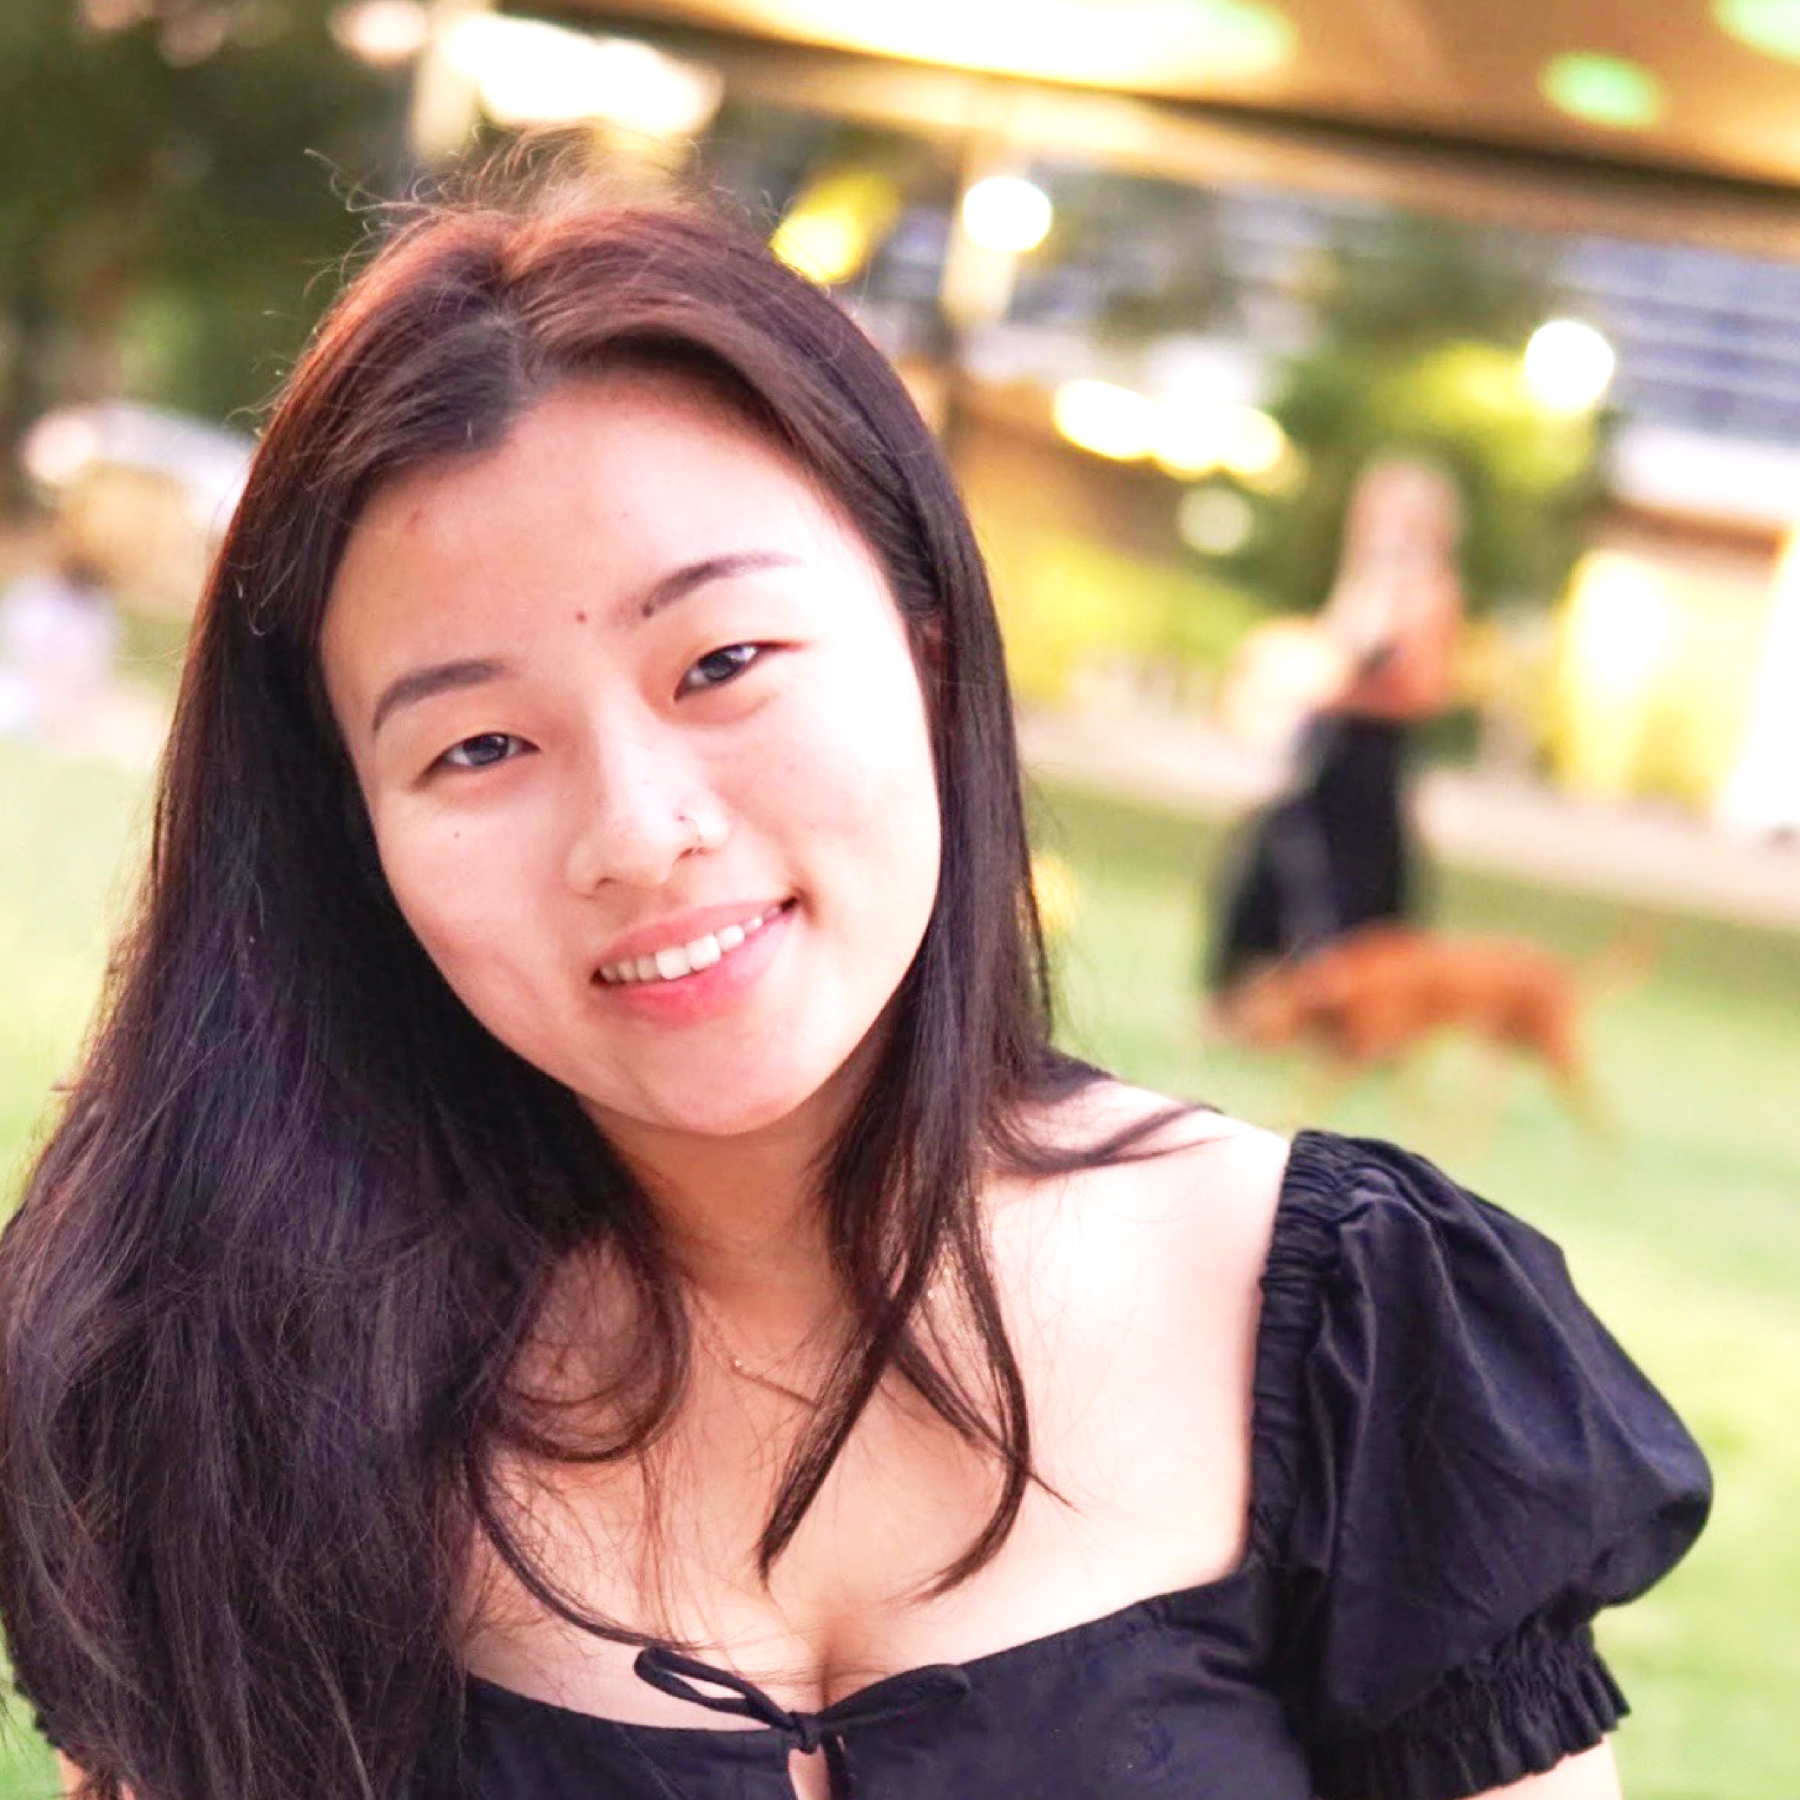 Heather Yu Huang wears a black shirt outside